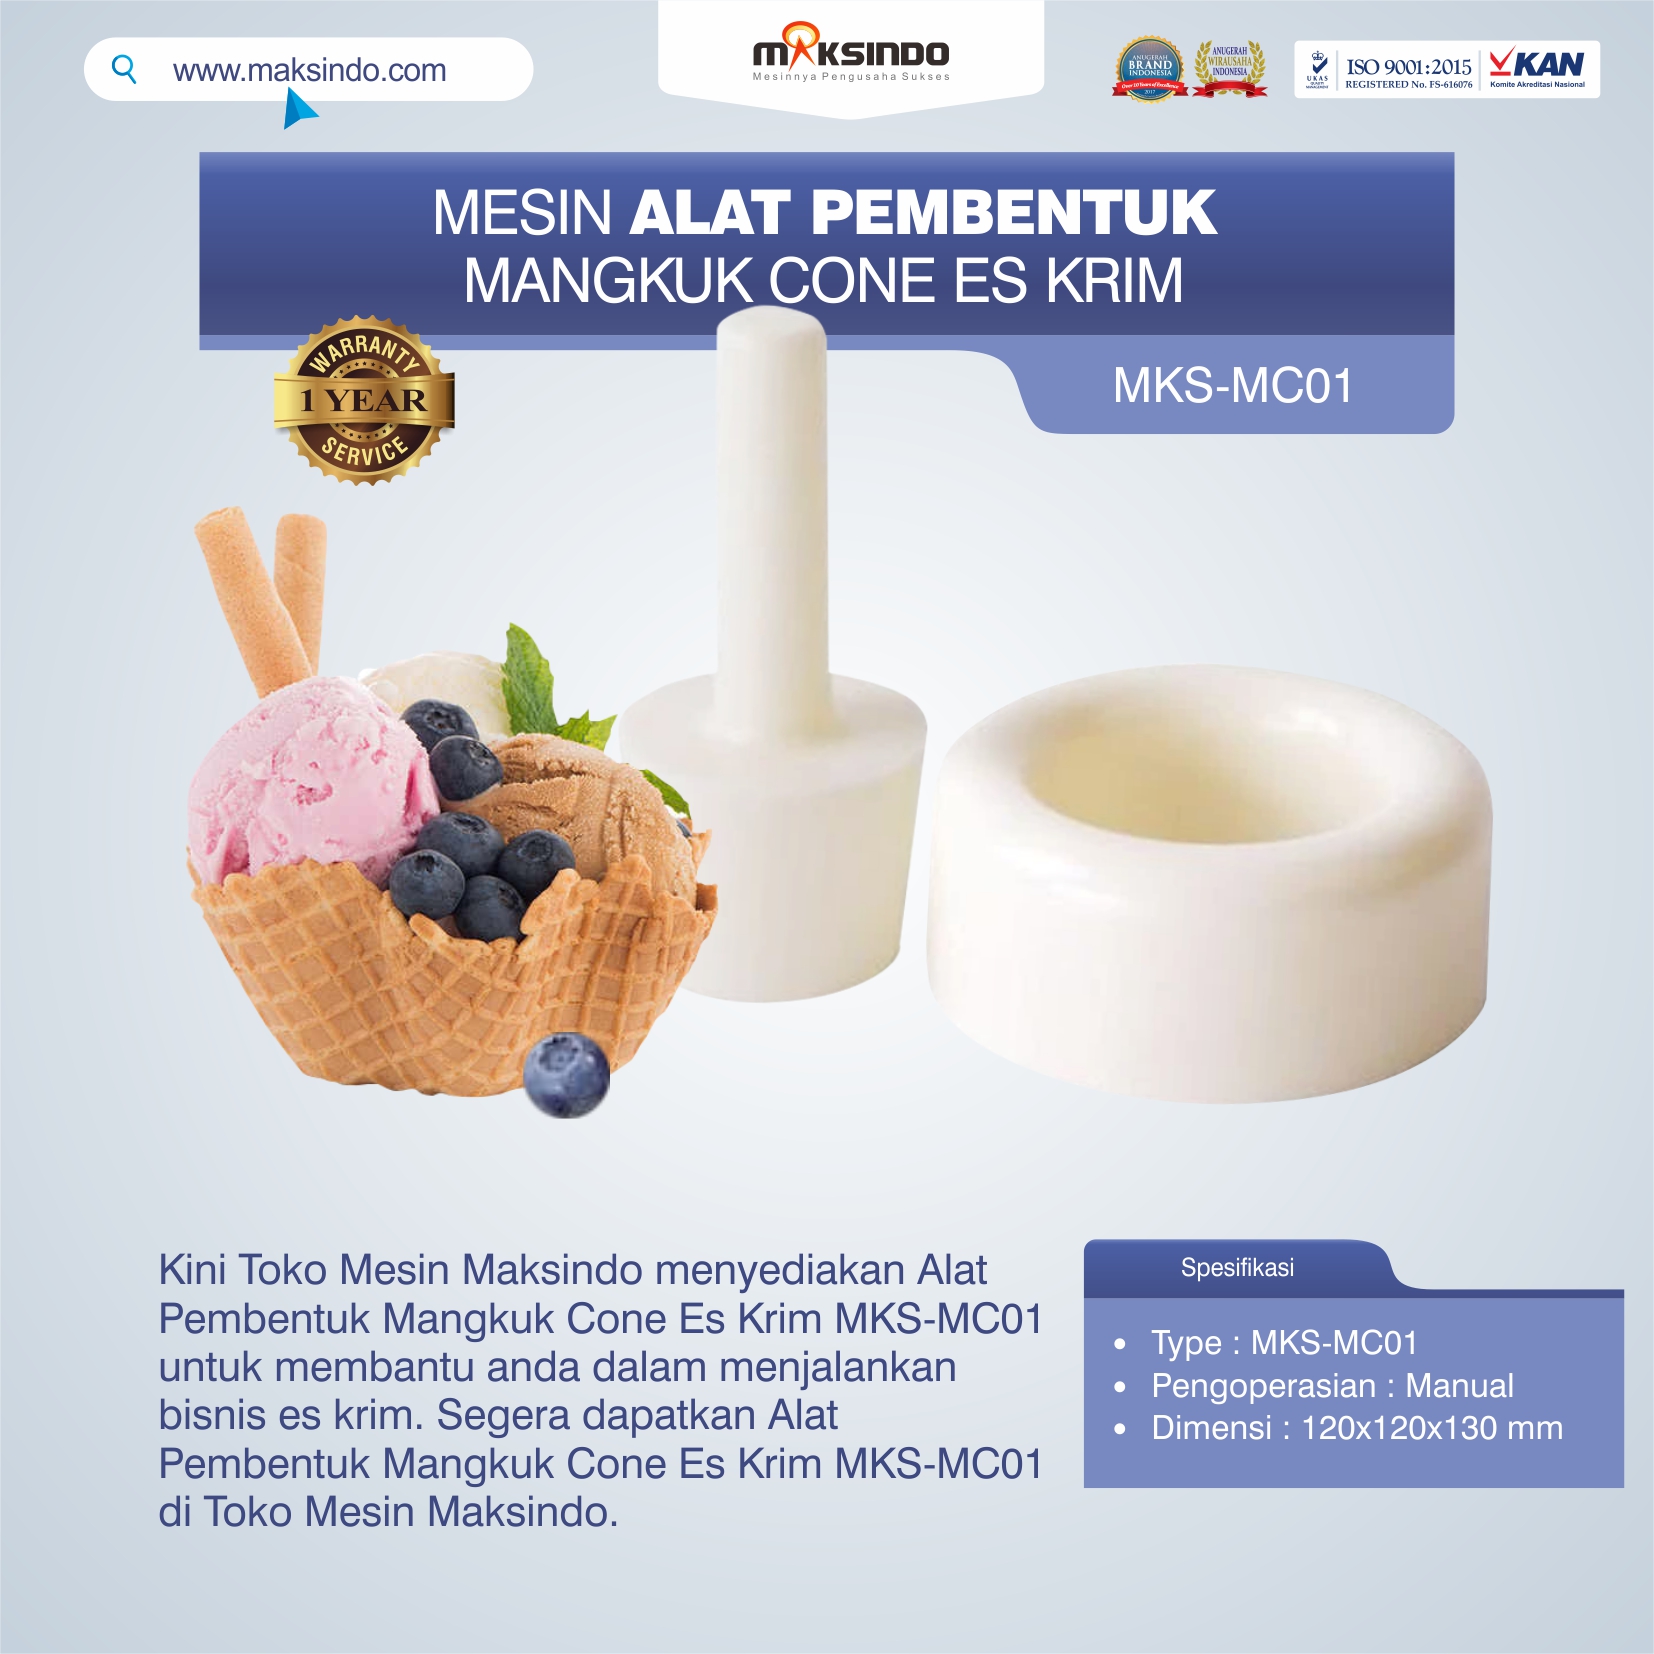 Jual Alat Pembentuk Mangkuk Cone Es Krim MKS-MC01 di Bekasi